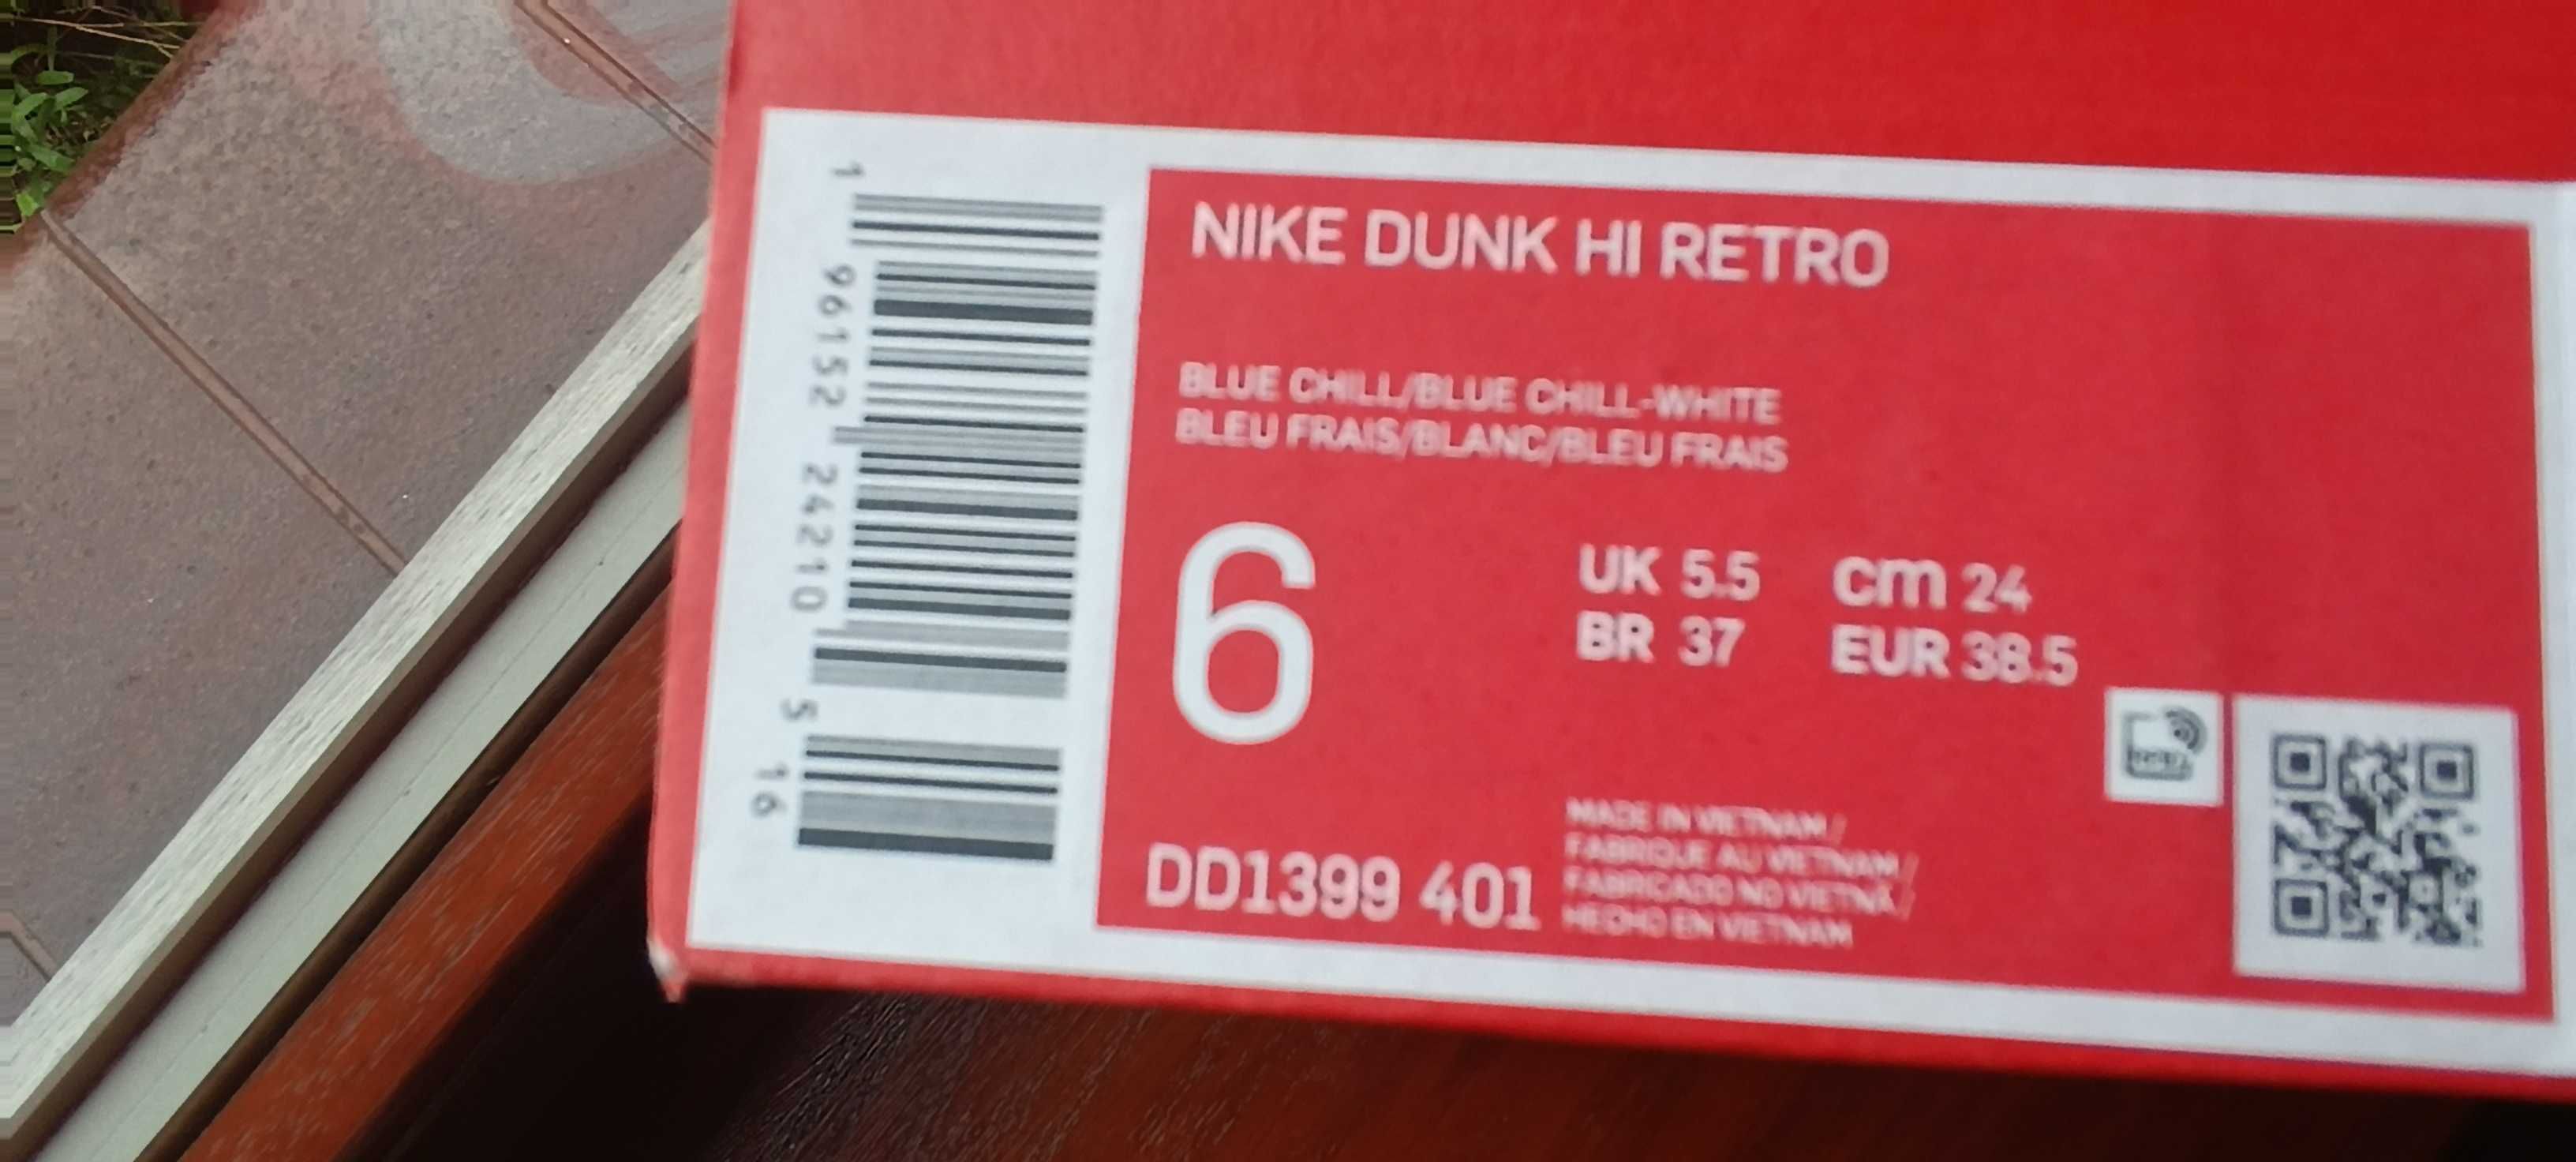 Eur 38,5 (24 cm) Nike Dunk High Blue Chill Biało błękitne DD1399,-401